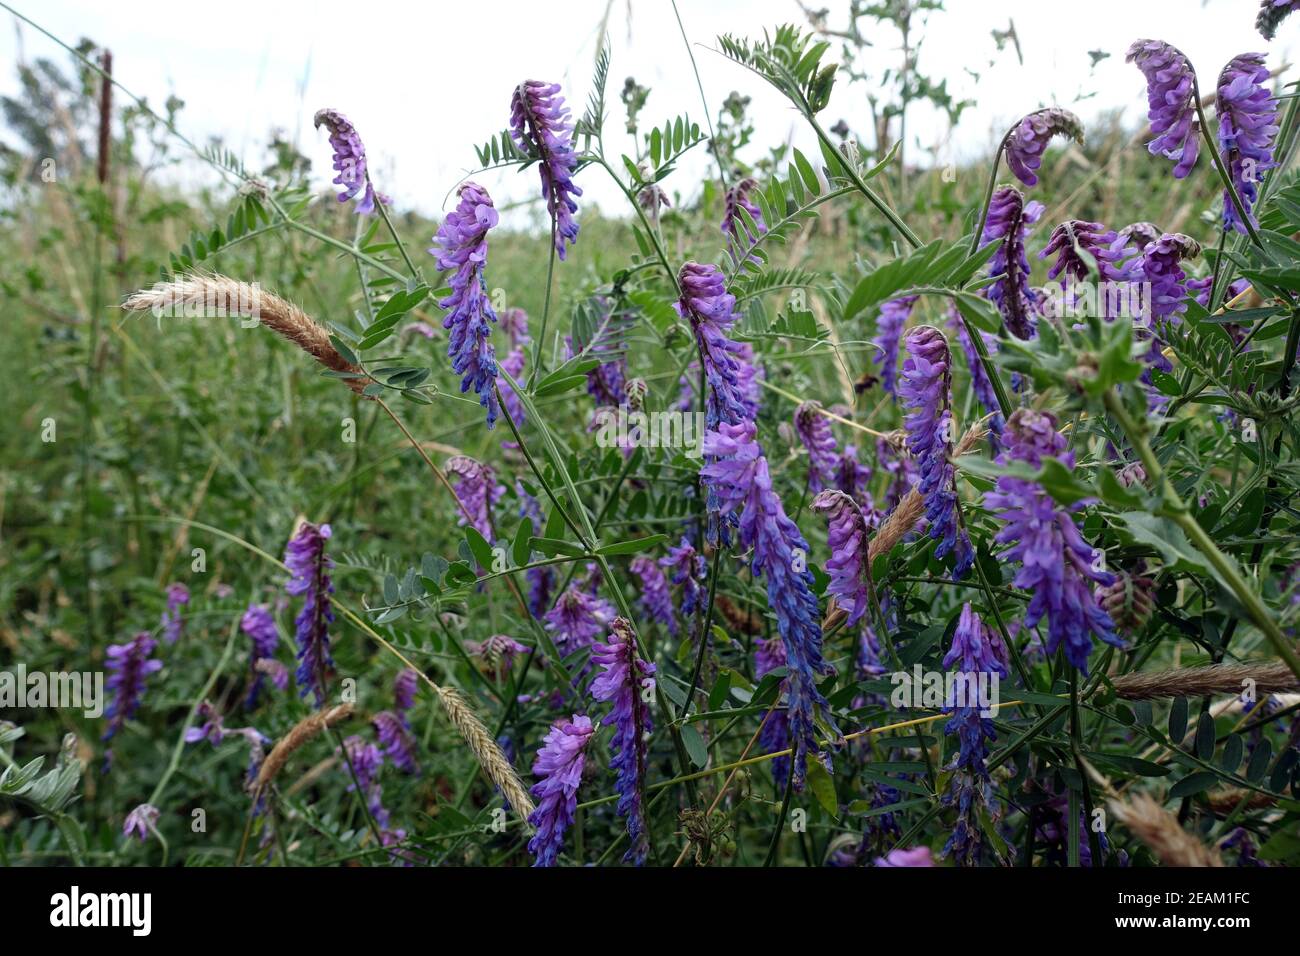 tufted vetch, cow vetch, bird vetch, blue vetch or boreal vetch (Vicia cracca), flowering plant Stock Photo